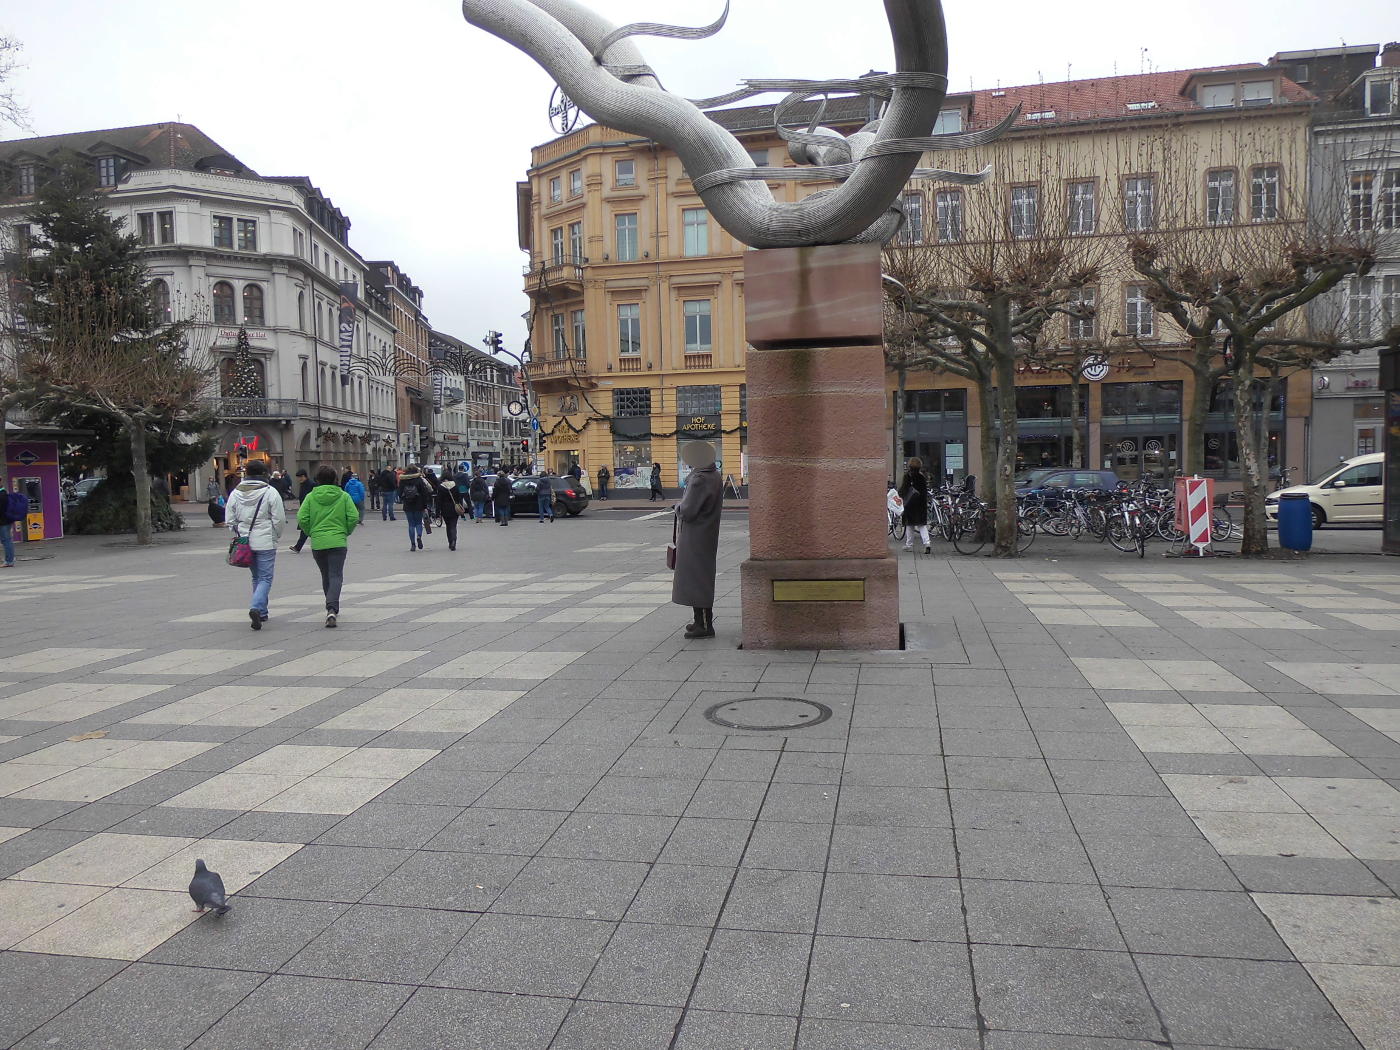 Watchtower Society Exposes Itself in Heidelberg